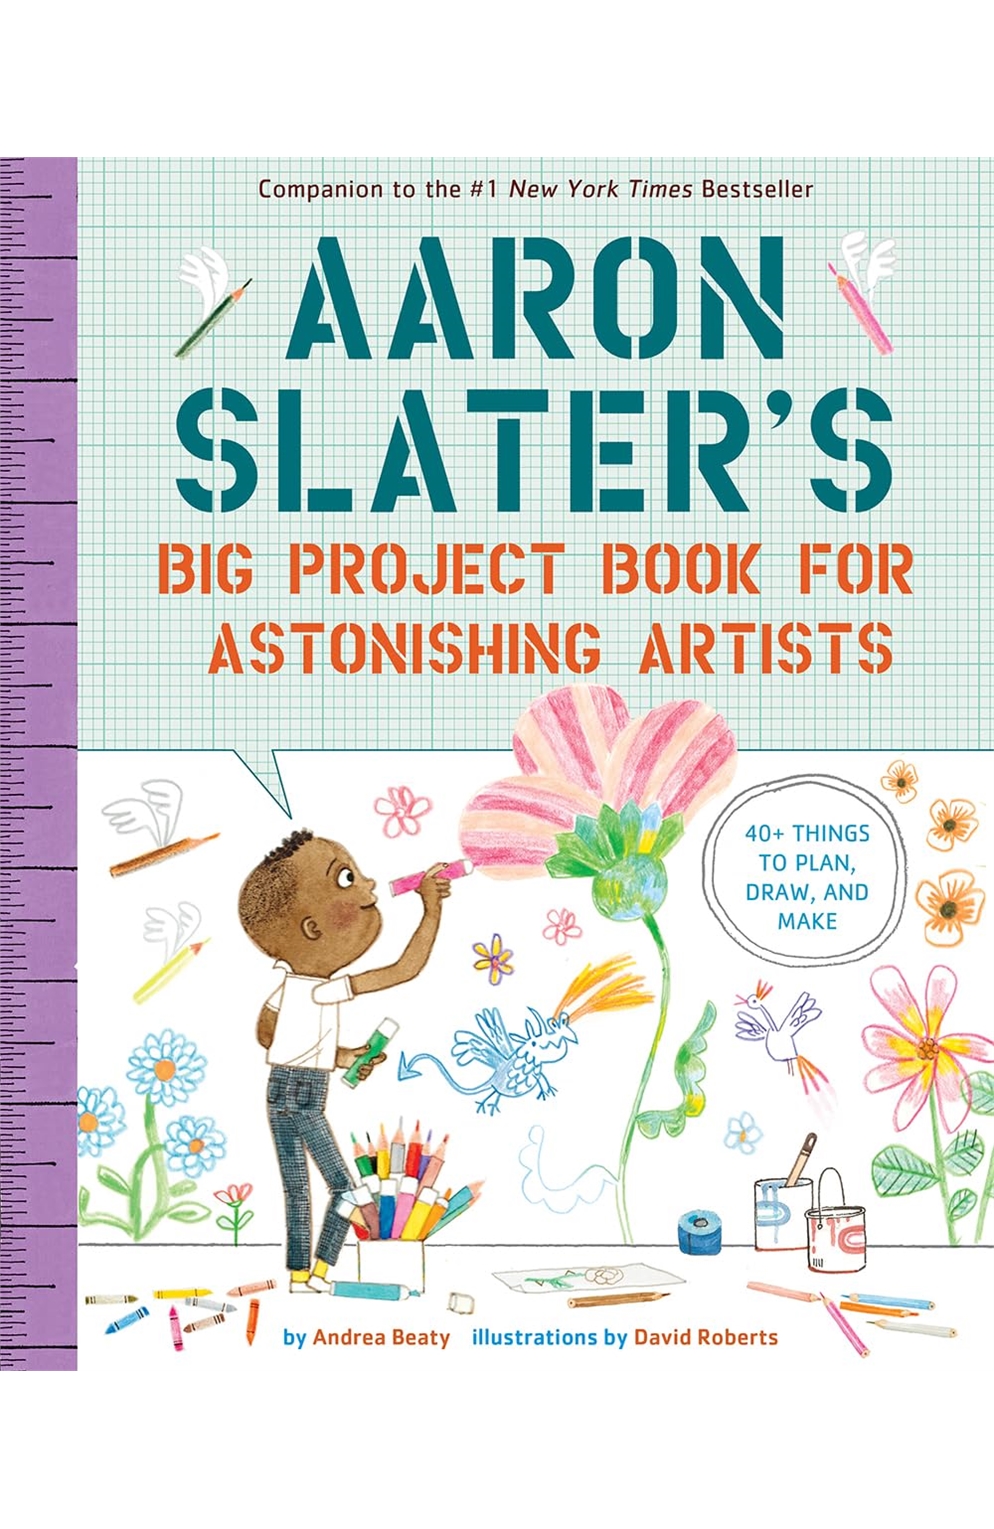 Aaron Slater's Big Project Book For Astonishing Artists